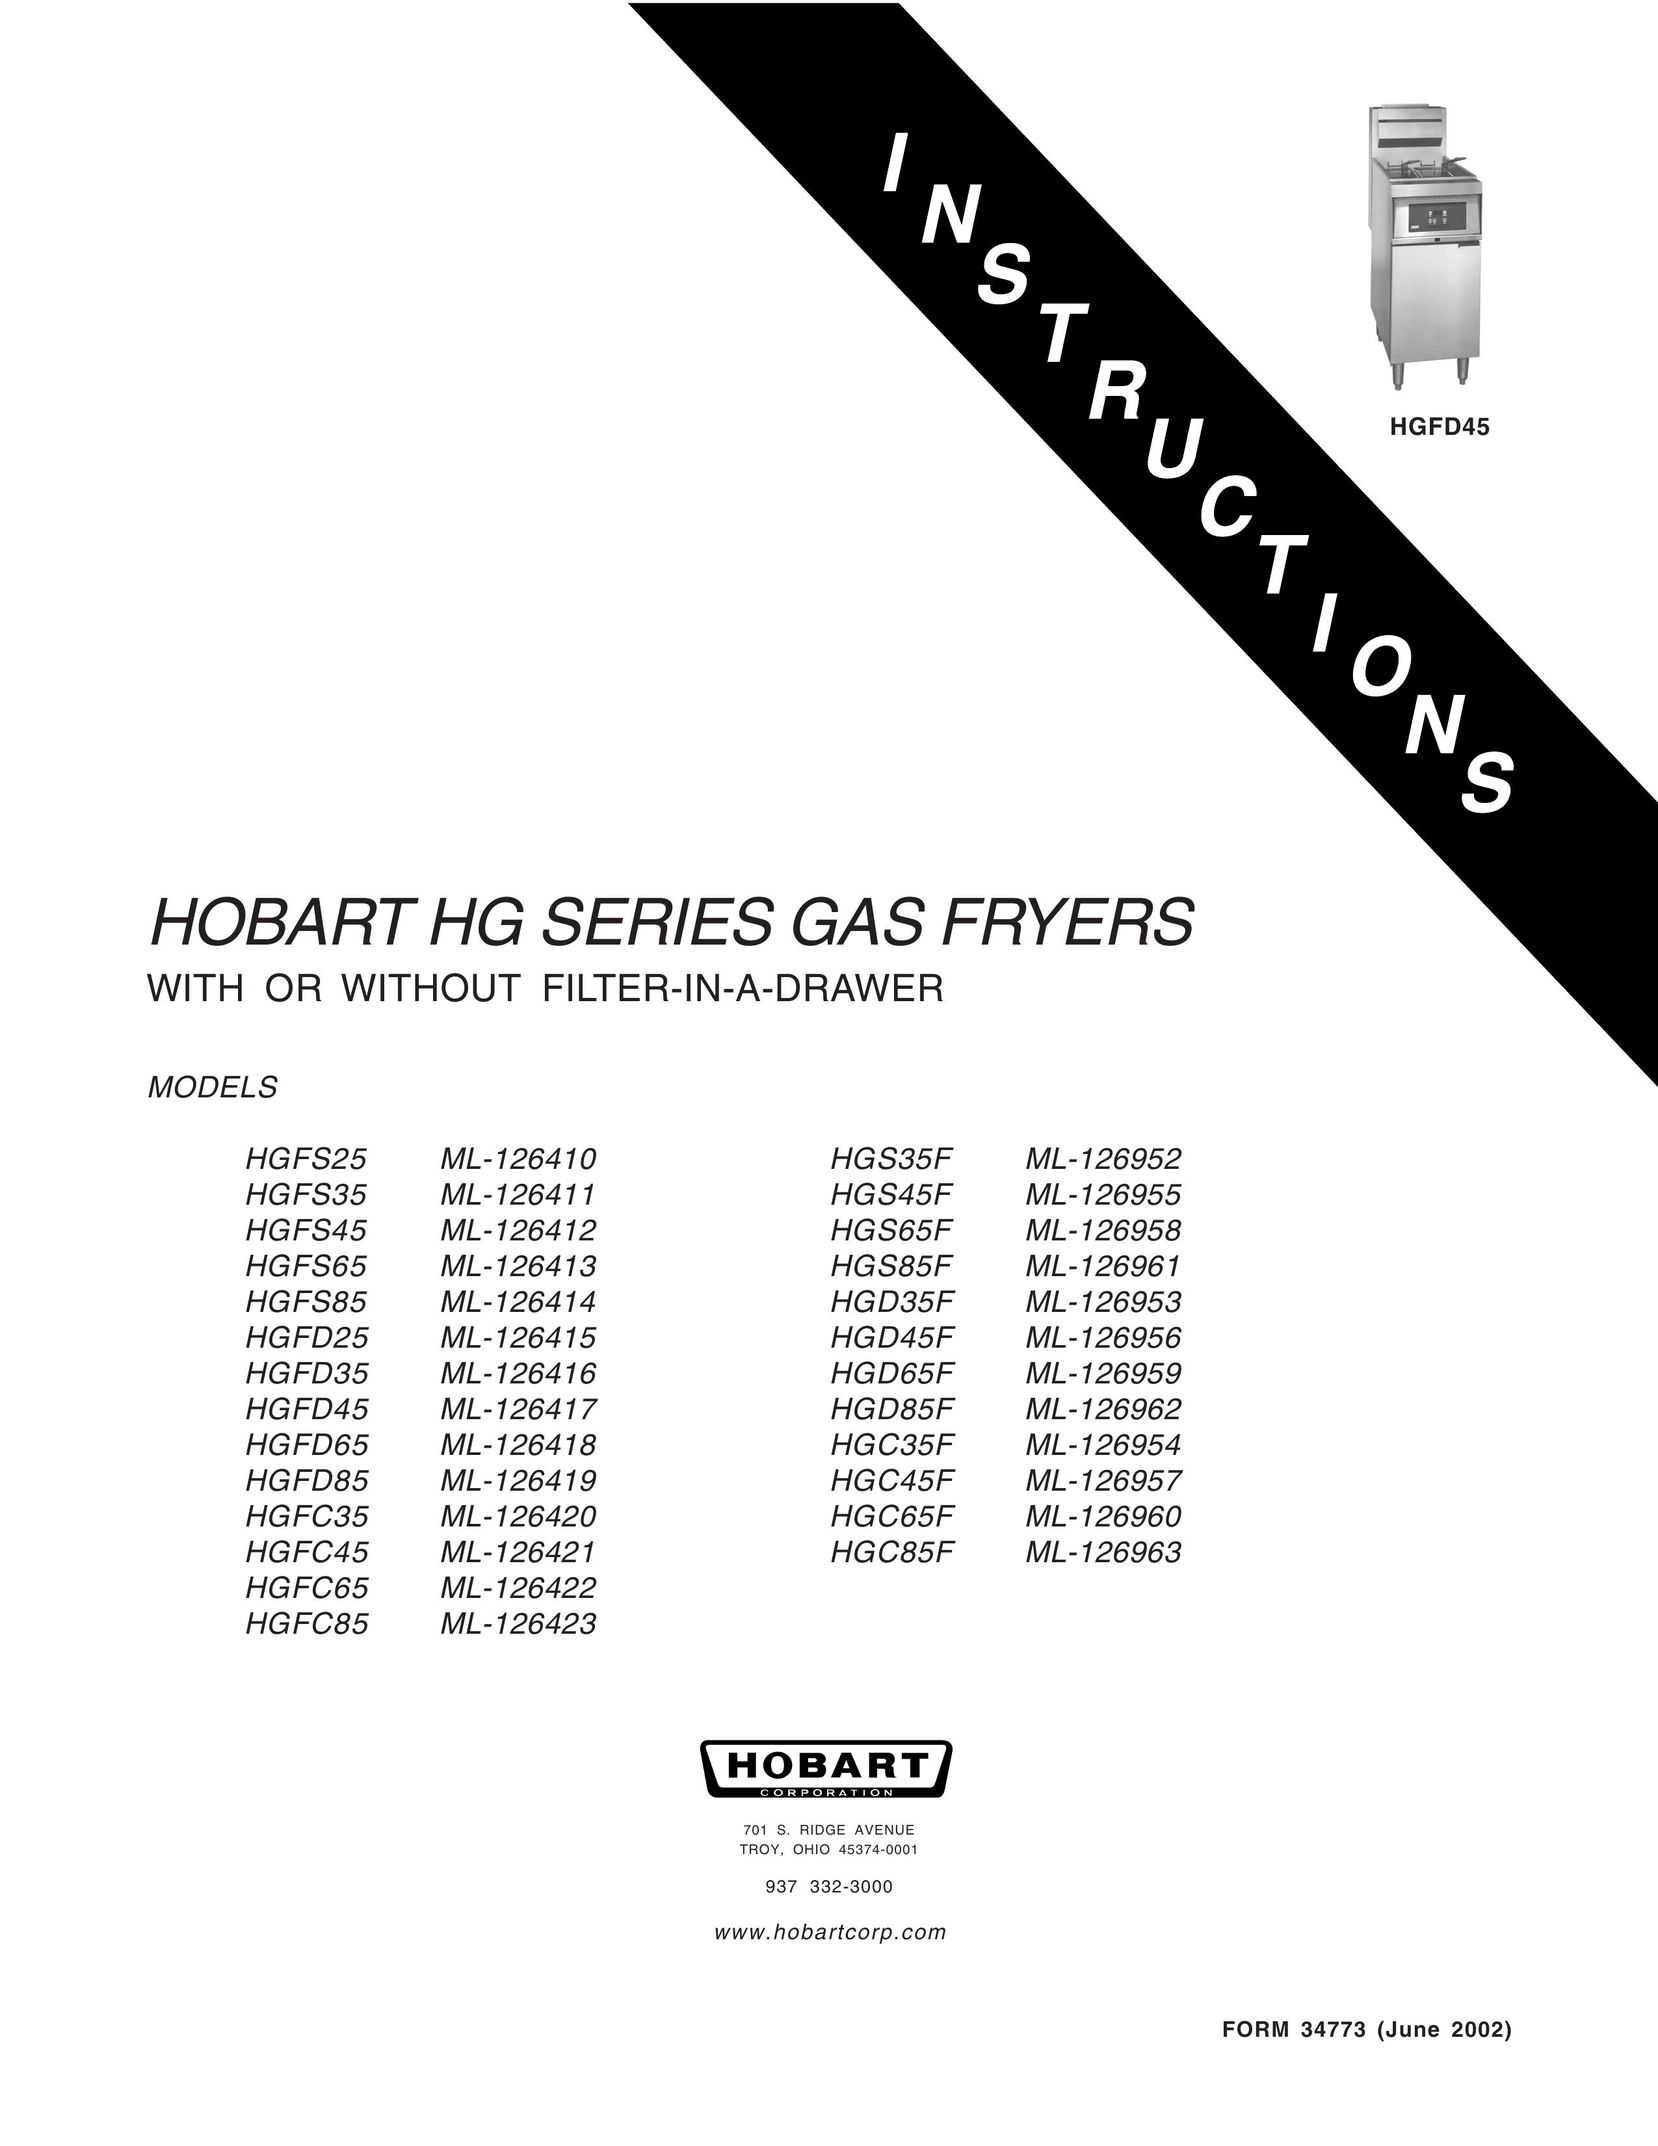 Hobart HGD45F ML-126956 Fryer User Manual